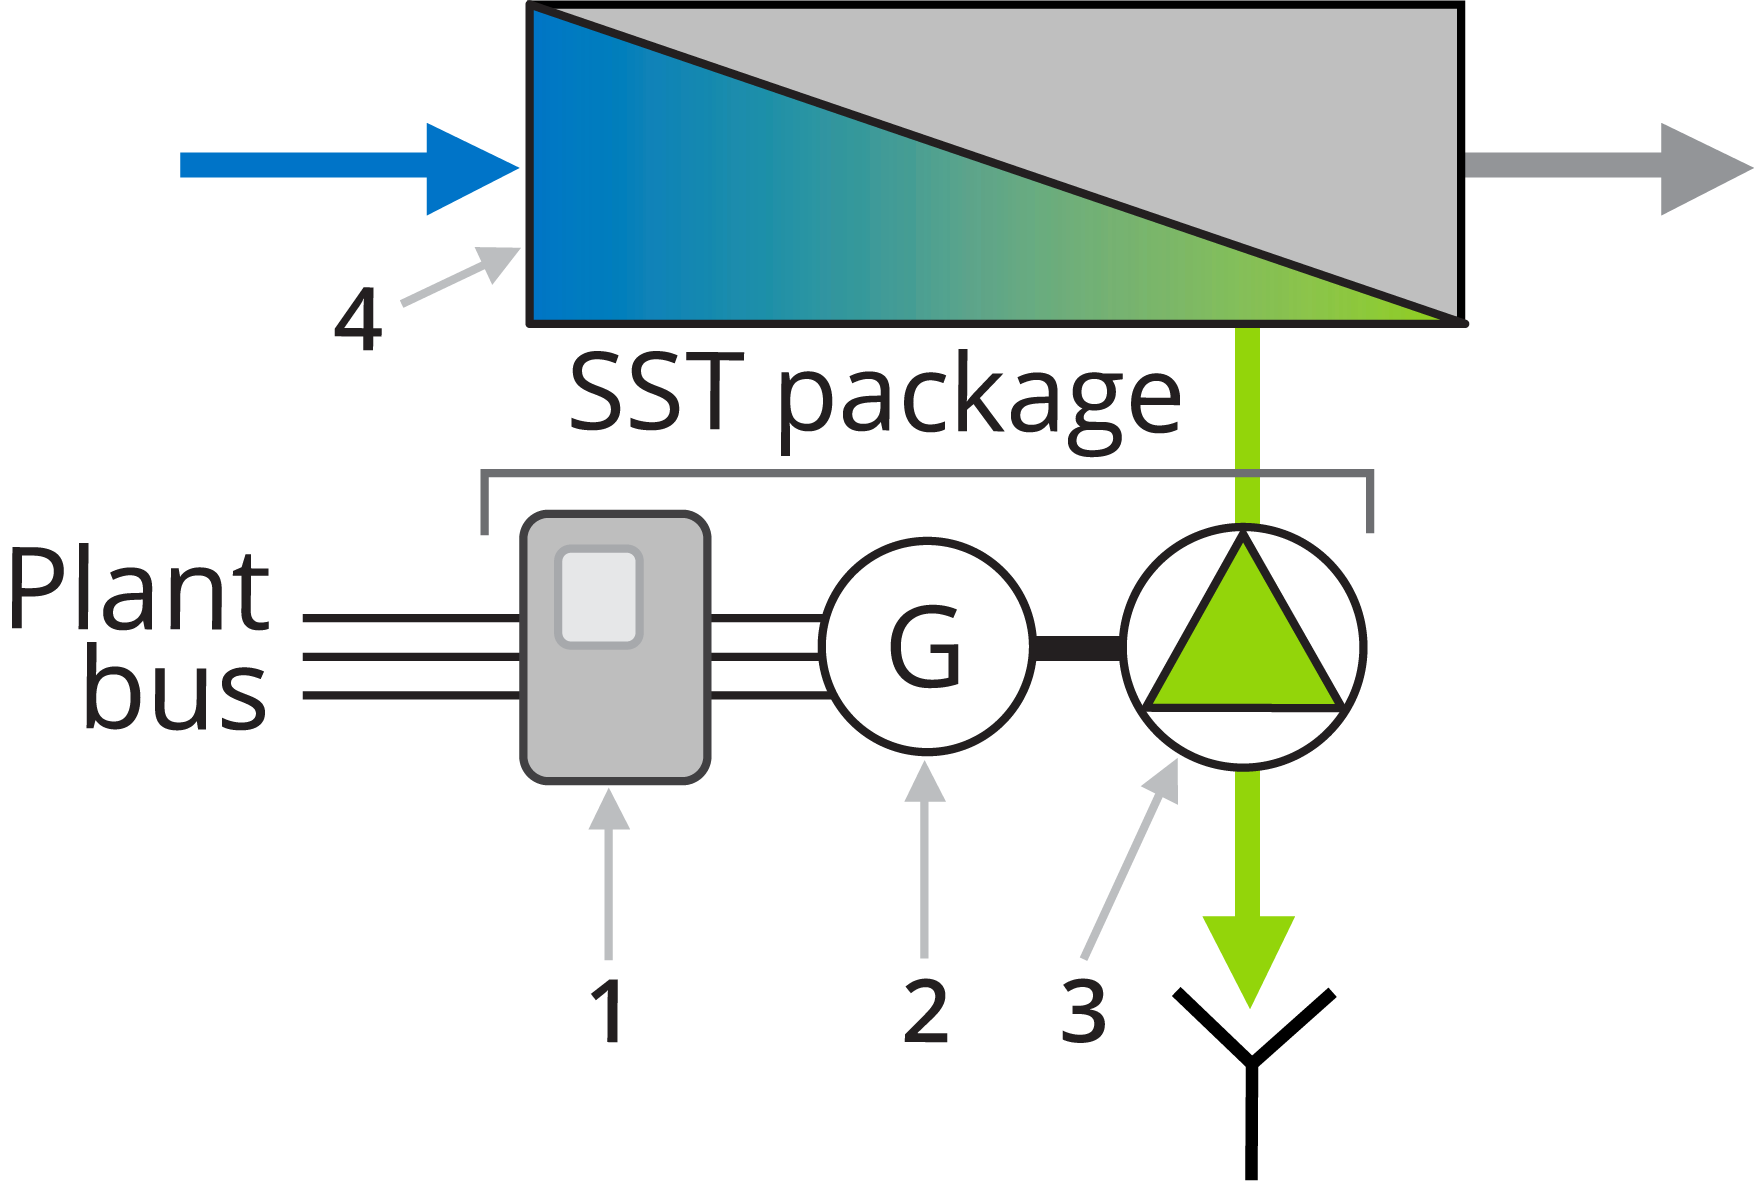 SST package